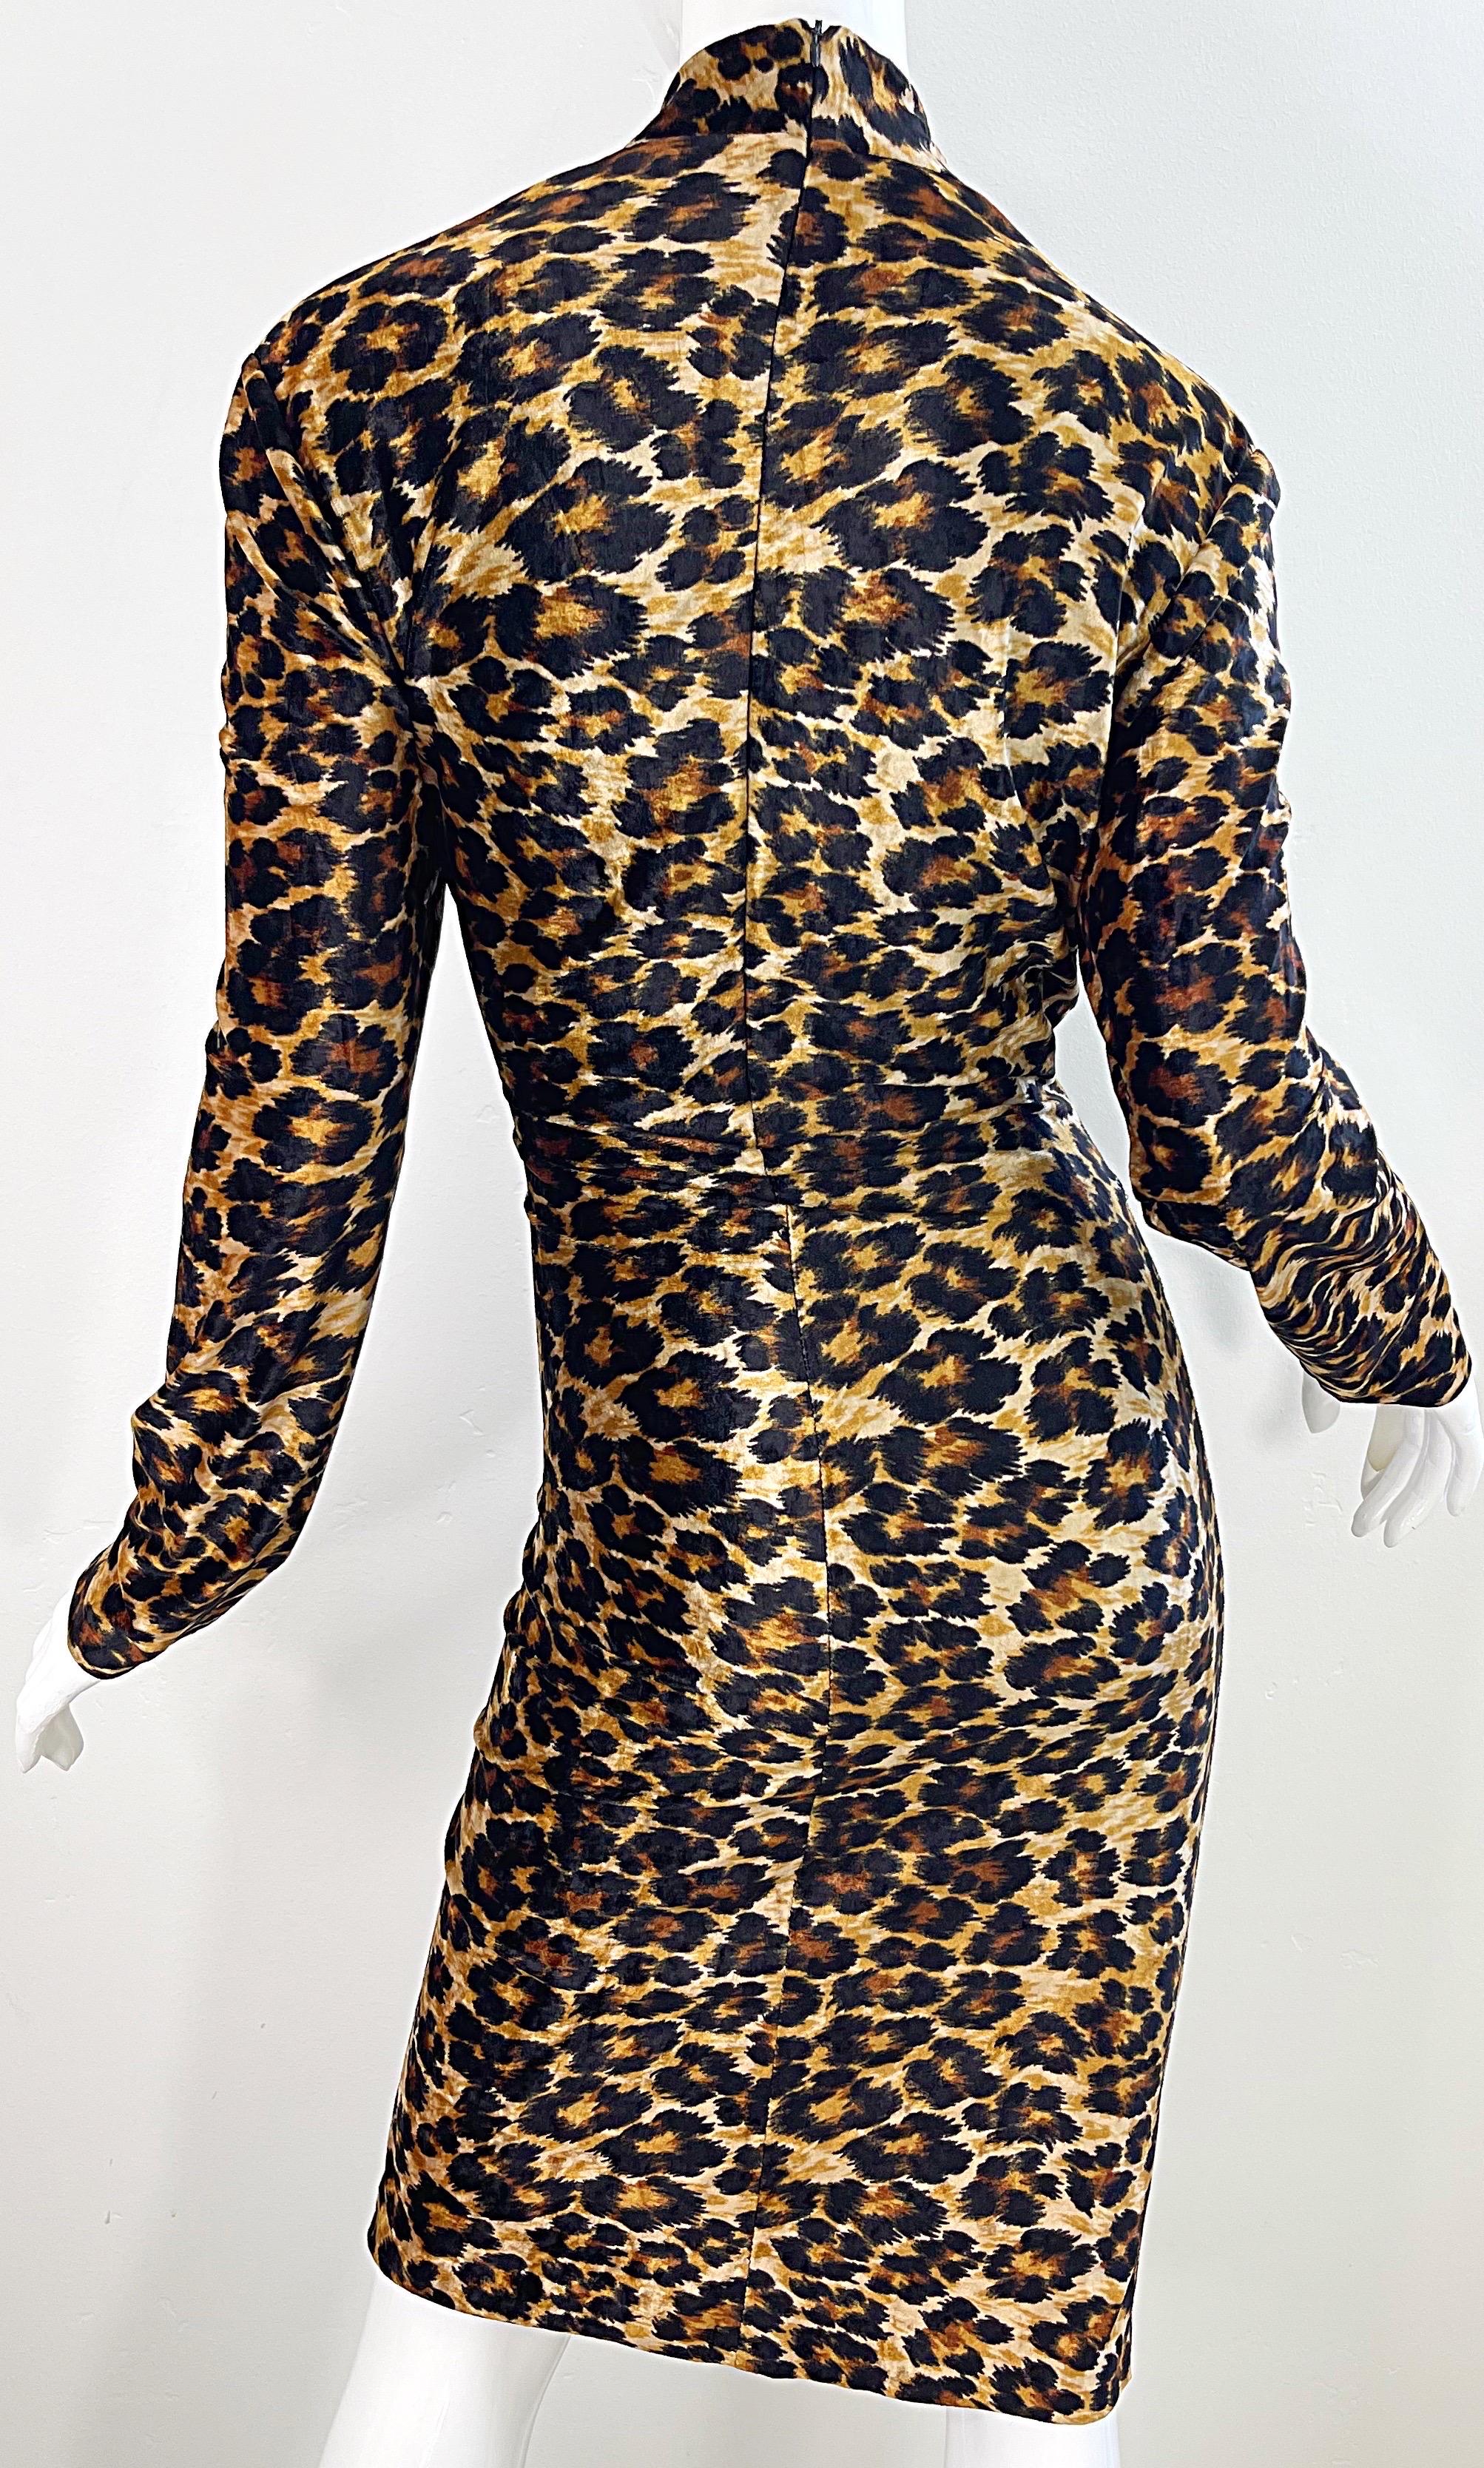 Black Documented Patrick Kelly 1989 Leopard Print Size Large Velour Vintage Dress 80s For Sale